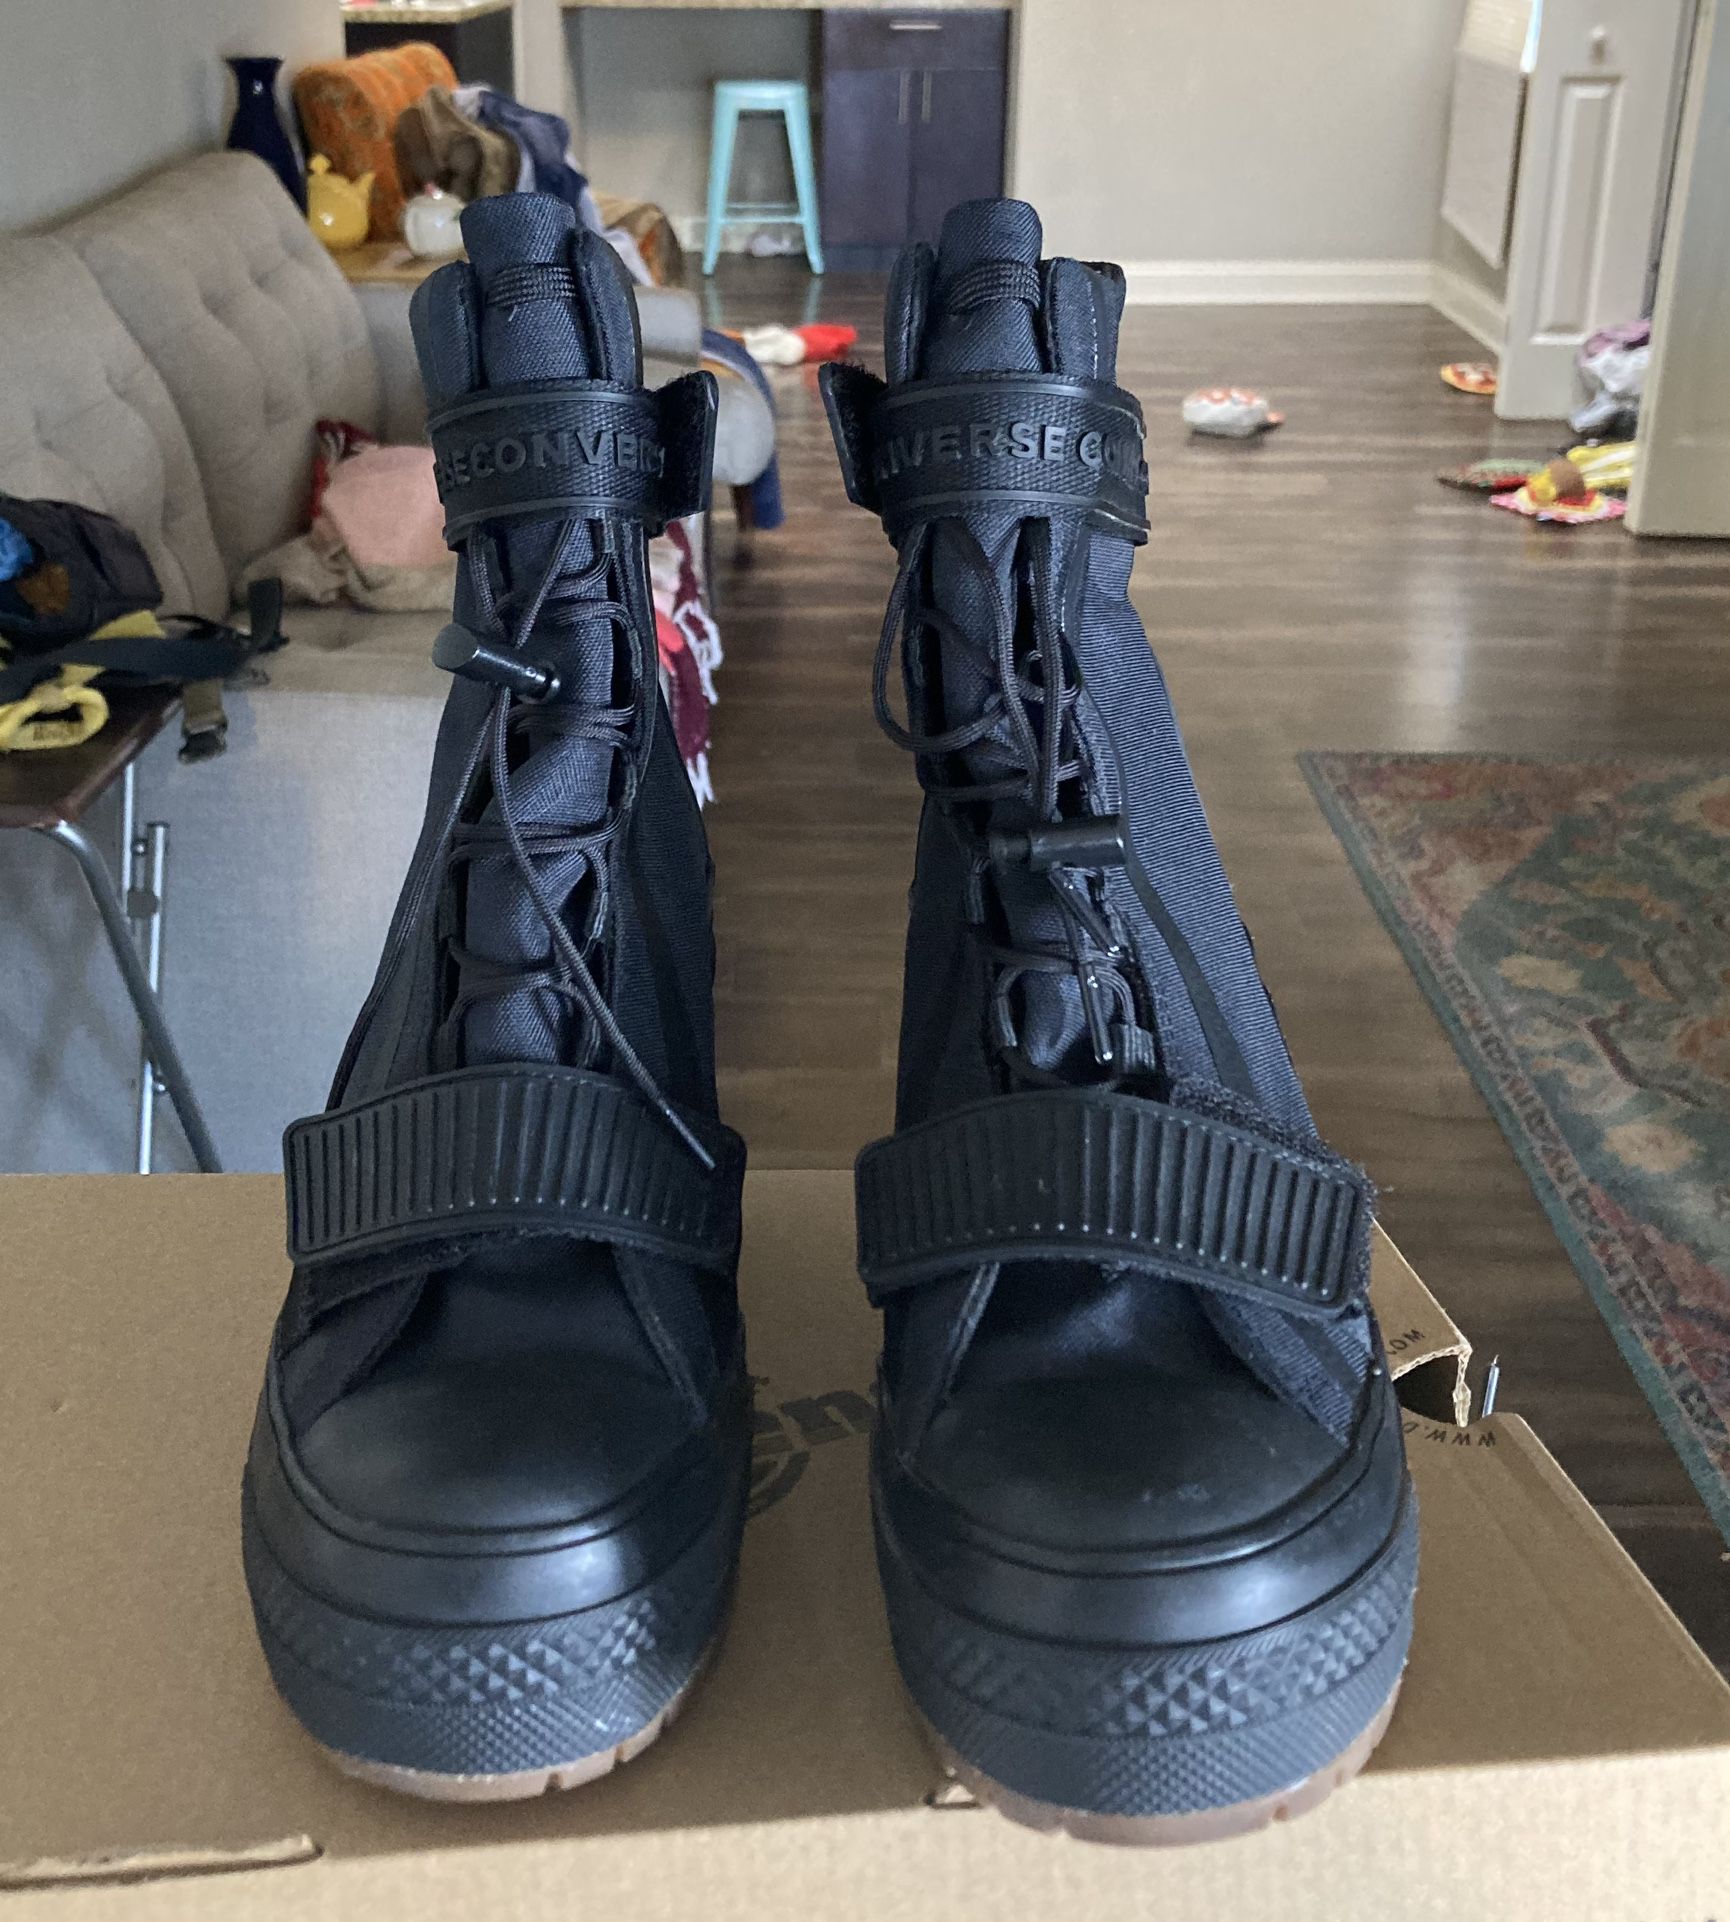 Converse Black Boots